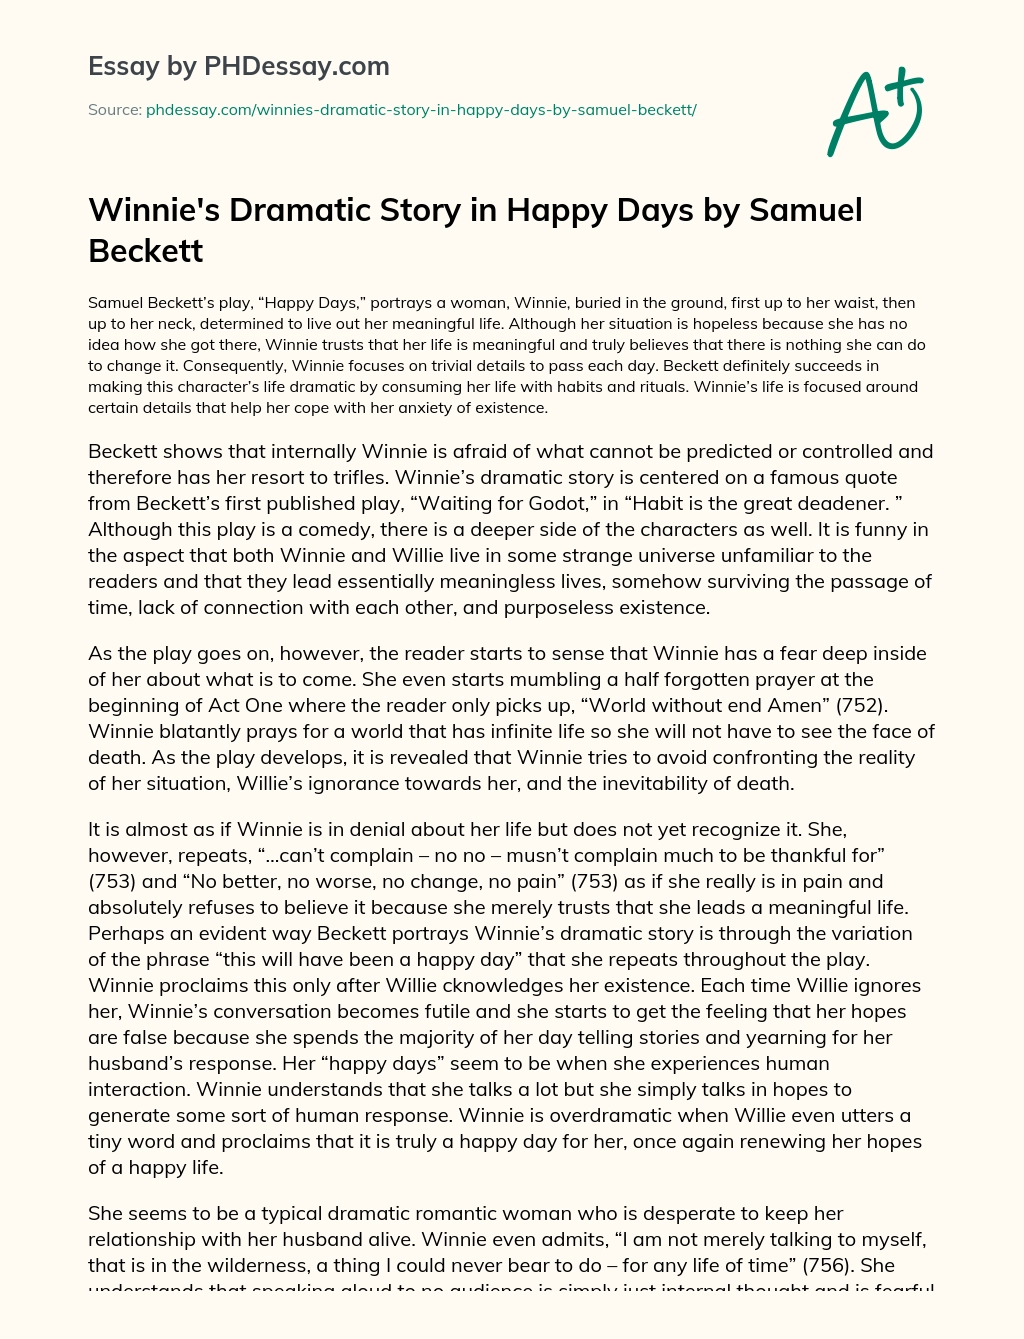 Winnie’s Dramatic Story in Happy Days by Samuel Beckett essay